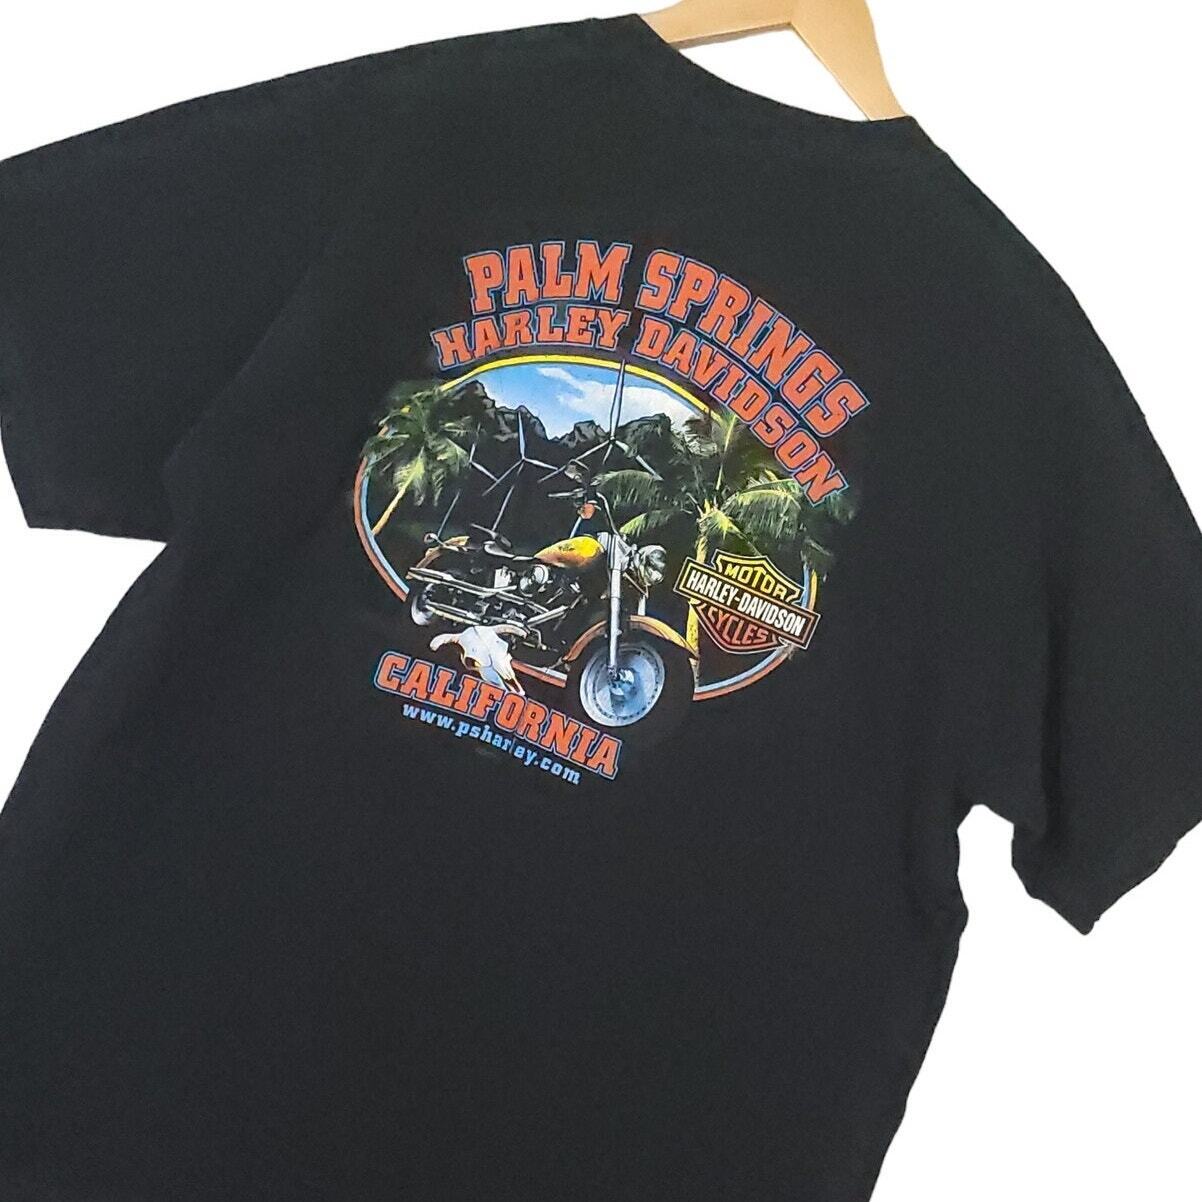 Vintage Harley Davidson Men's Palm Springs Harley Davidson T-Shirt XL Black